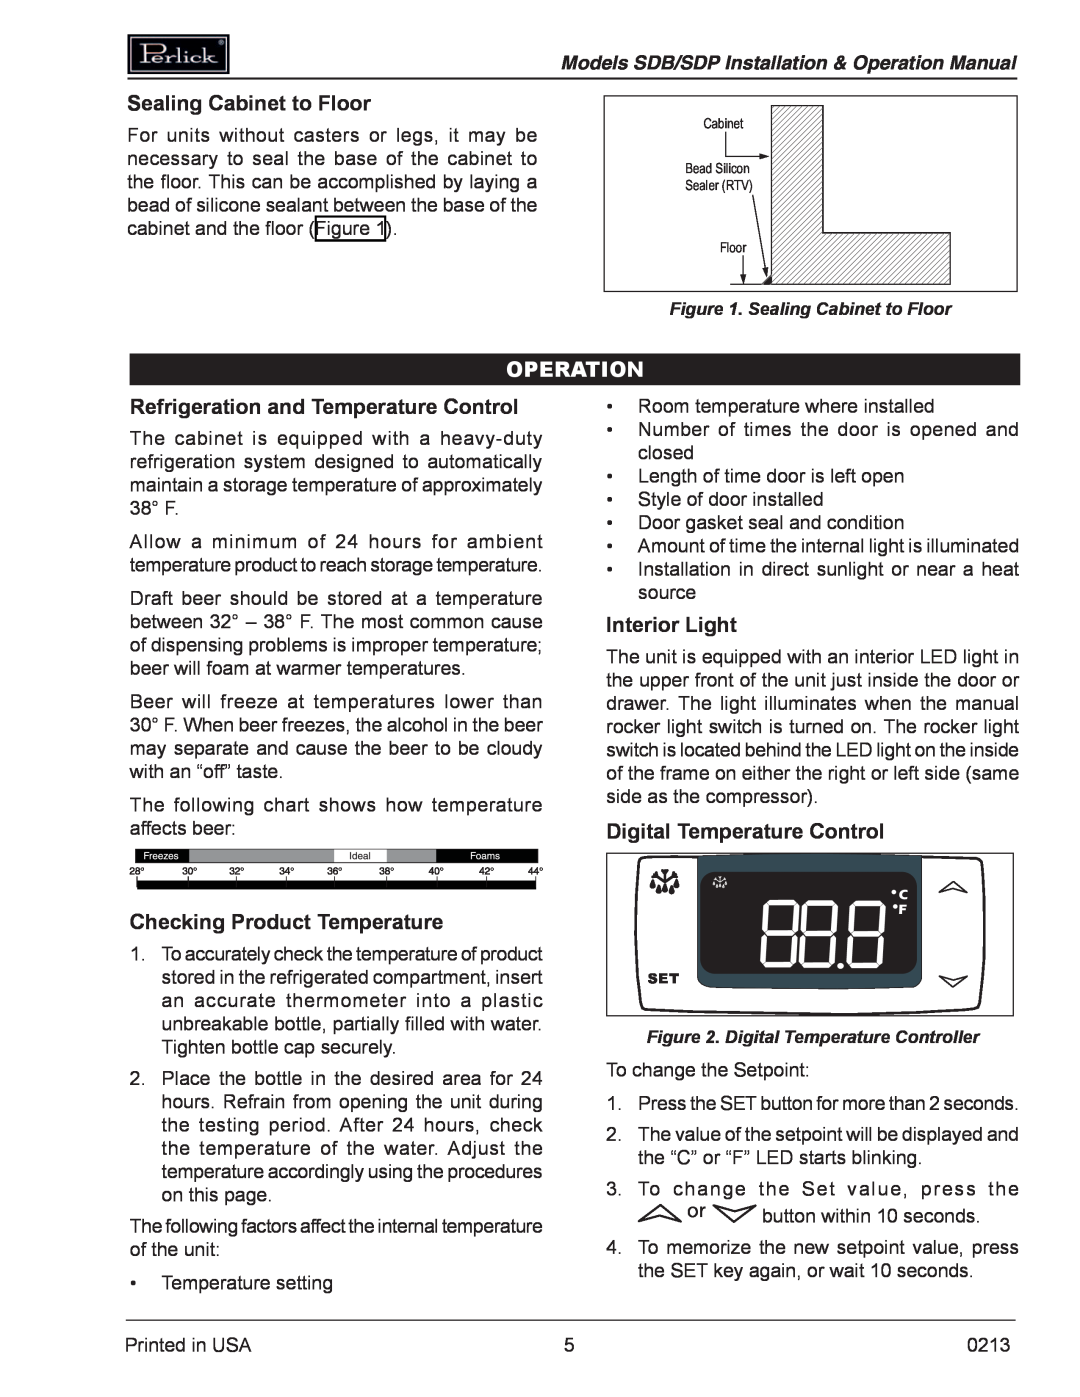 Perlick SDBR48 operation manual Sealing Cabinet to Floor, Operation, Refrigeration and Temperature Control, Interior Light 